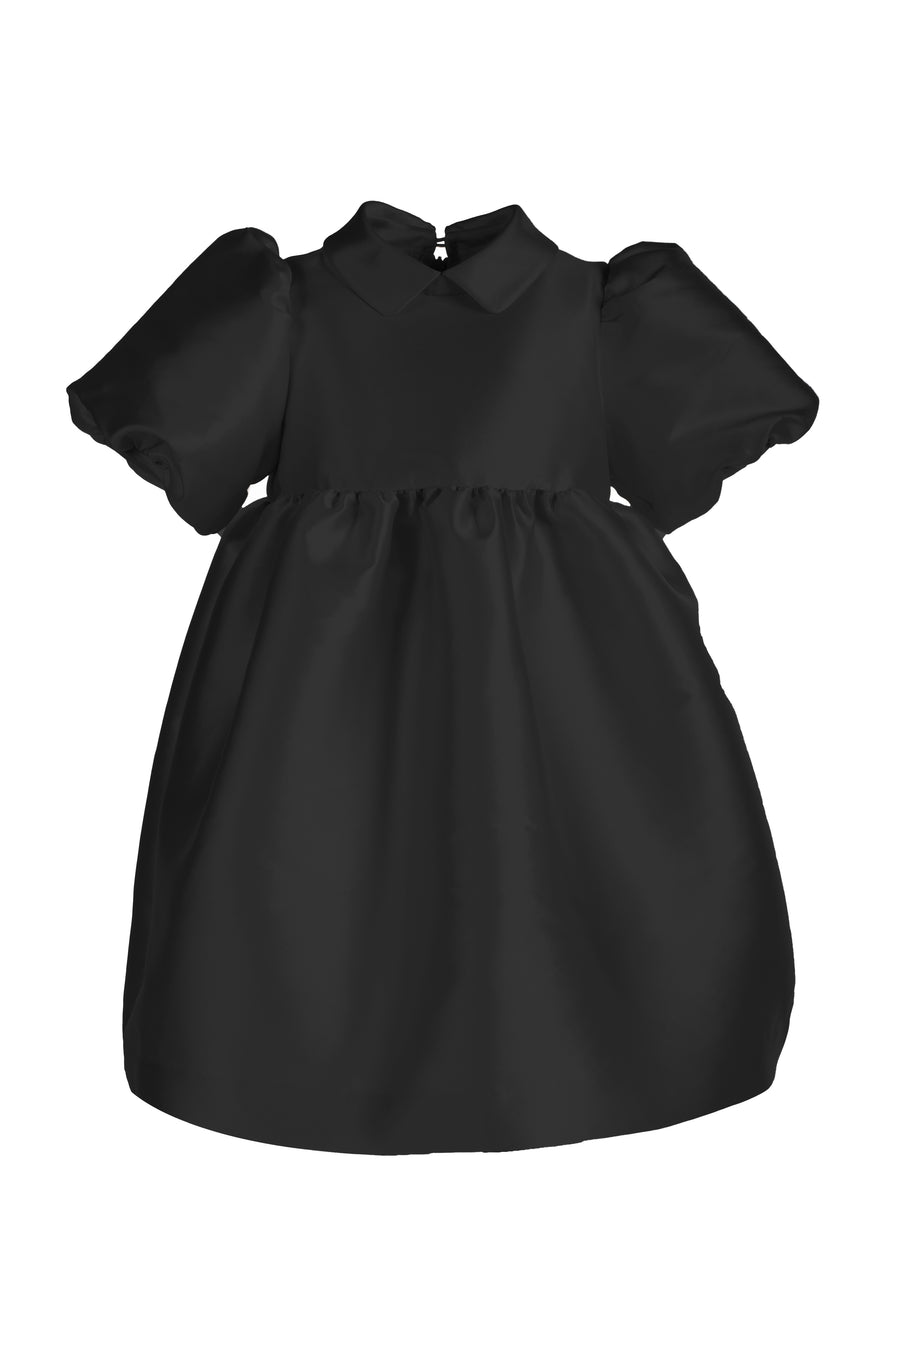 Puff Sleeve Black Dress by Mimisol